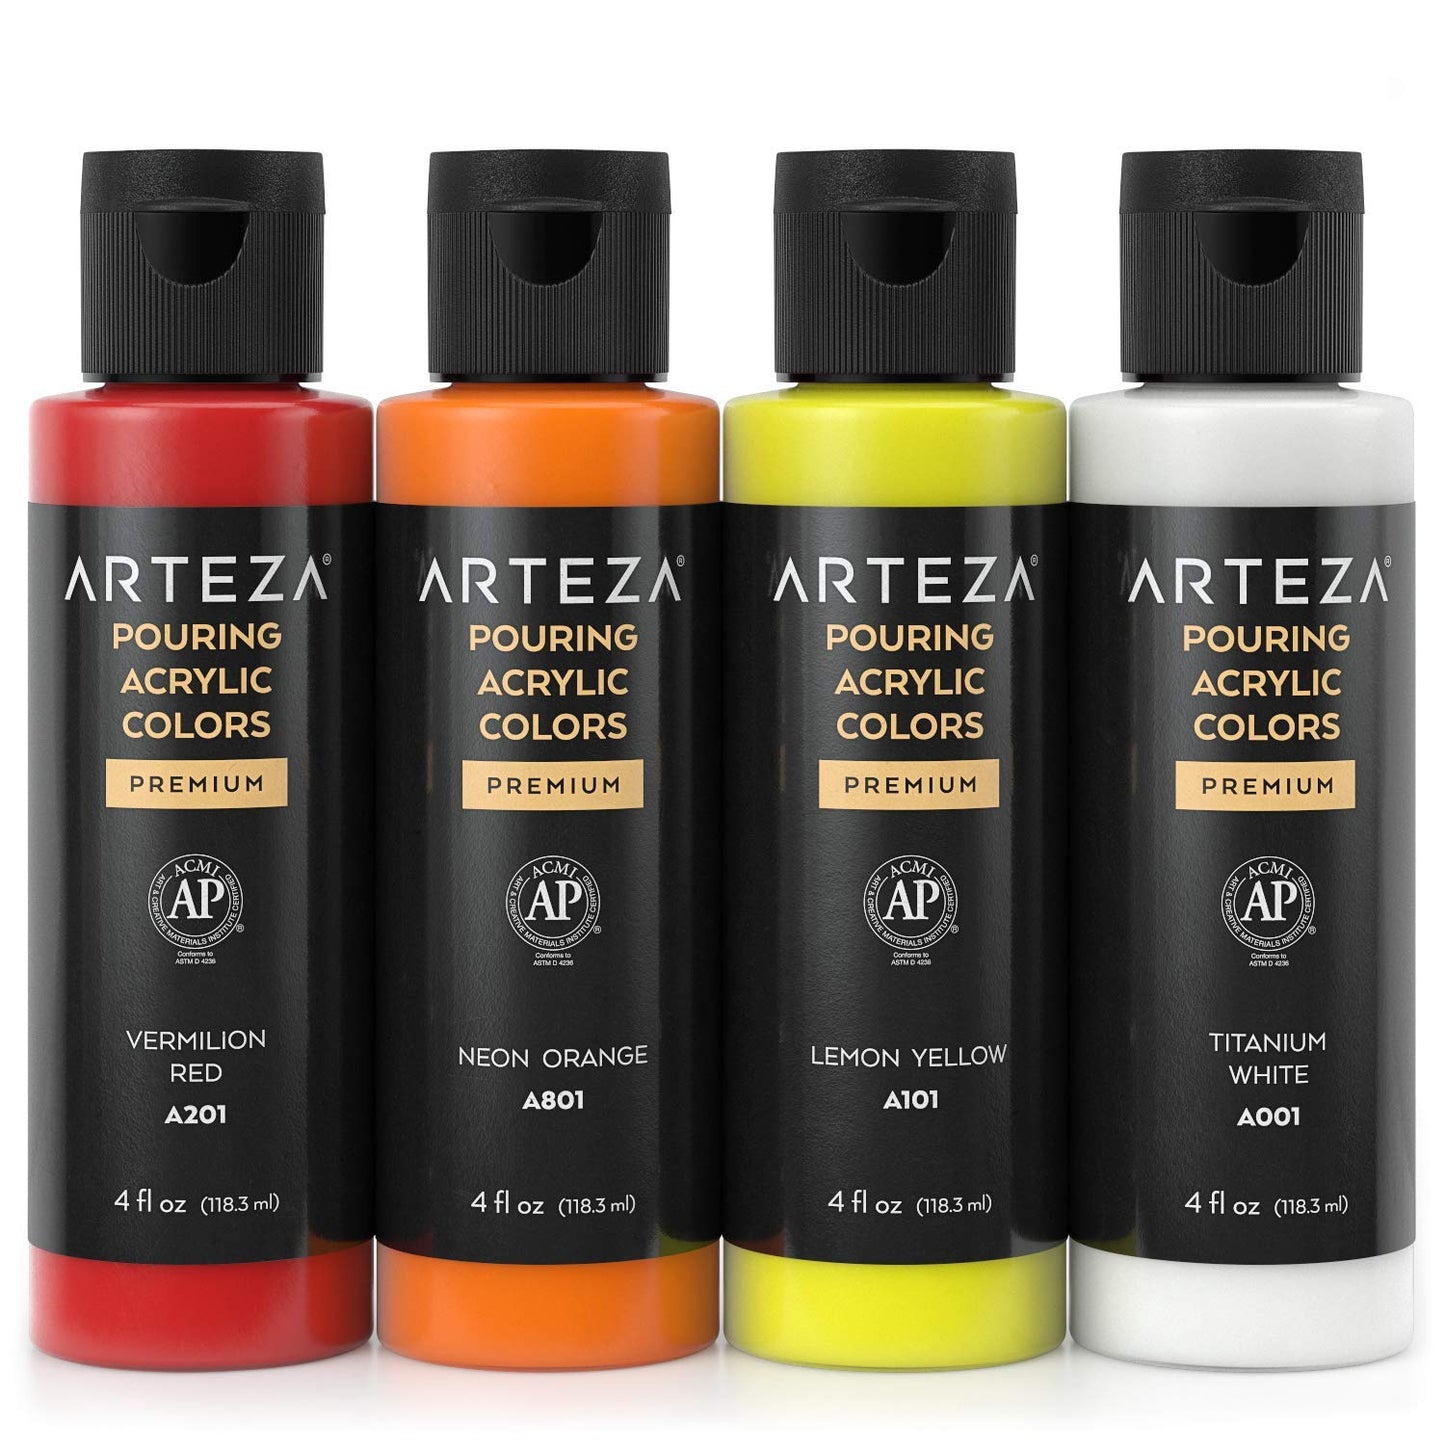 Arteza Pouring Acrylic Paint, Solar Tones, 4oz Bottles - Set of 4